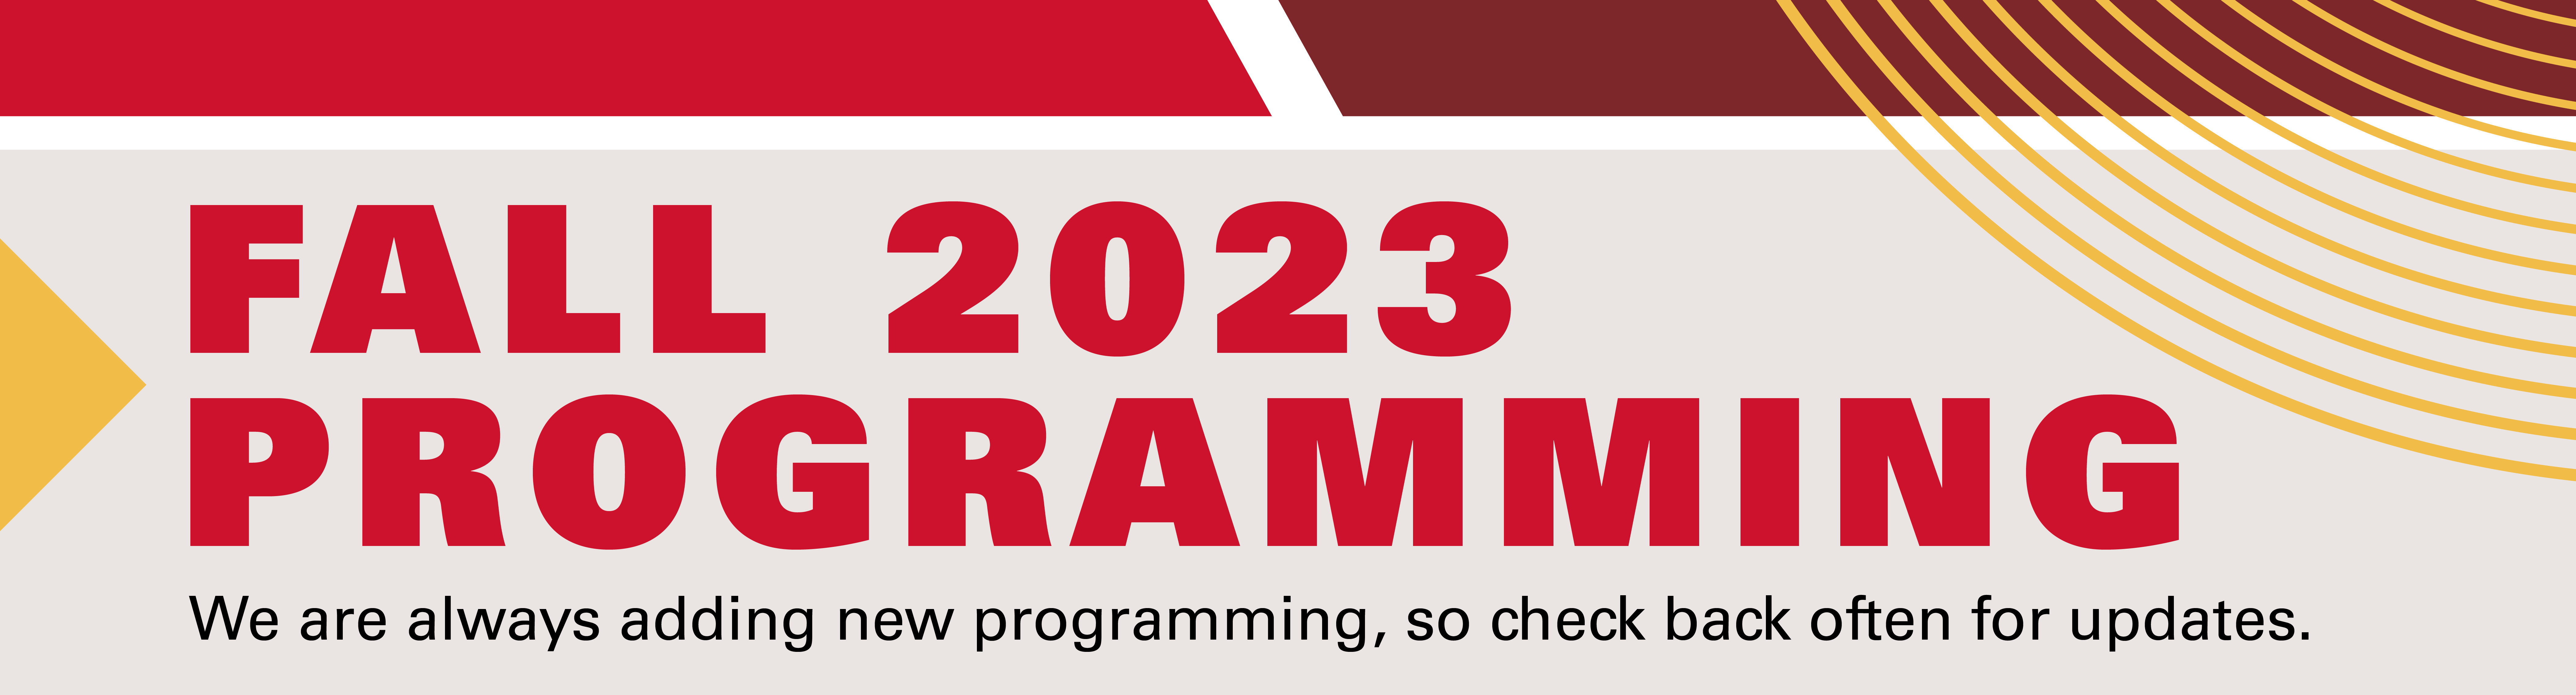 Fall 2023 Programming